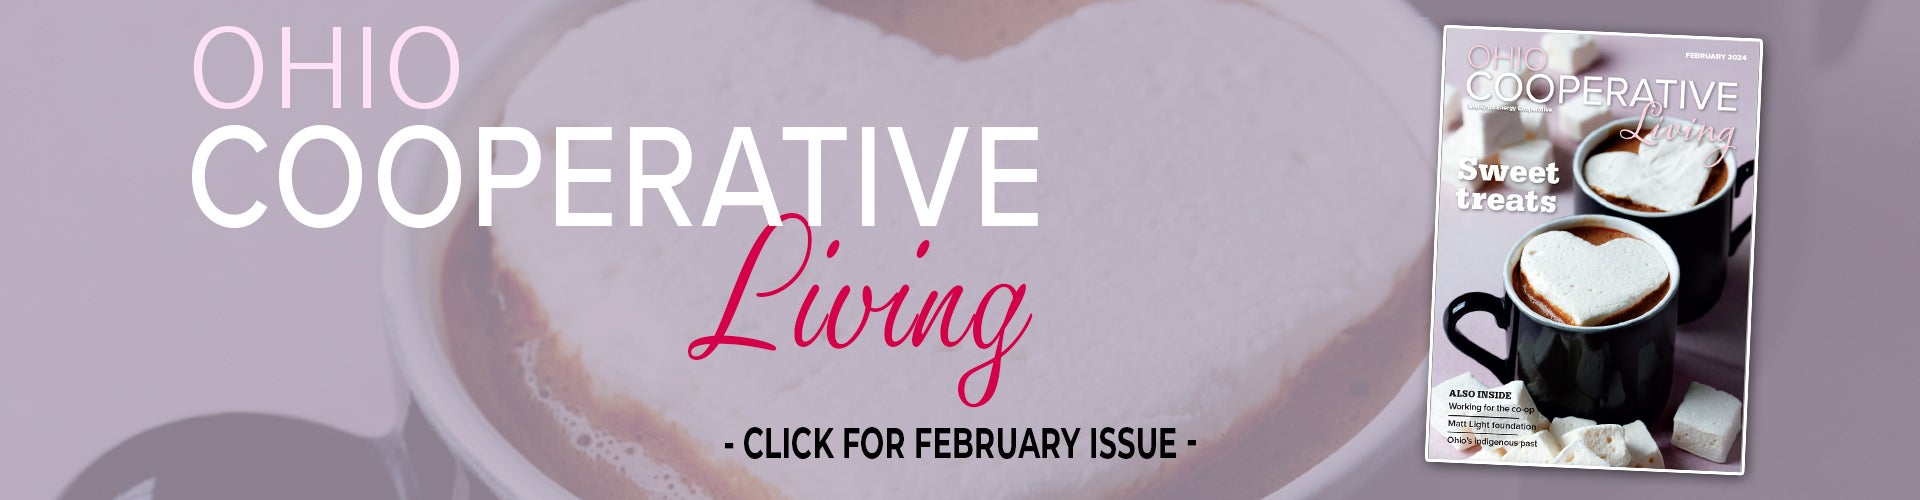 February issue of Ohio Cooperative Living!